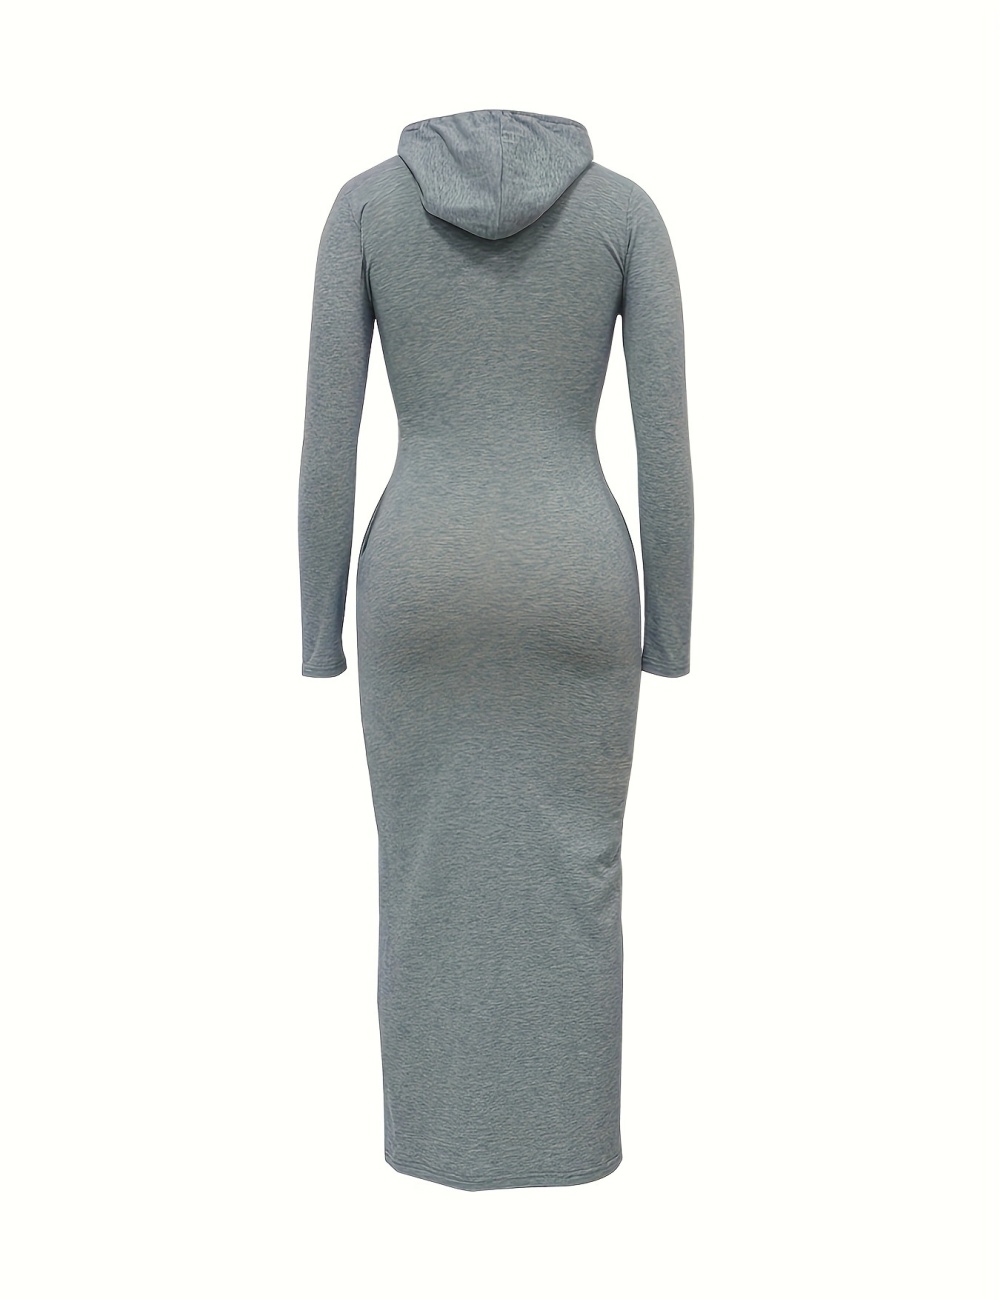 Long sleeve slim hooded pure dress for women